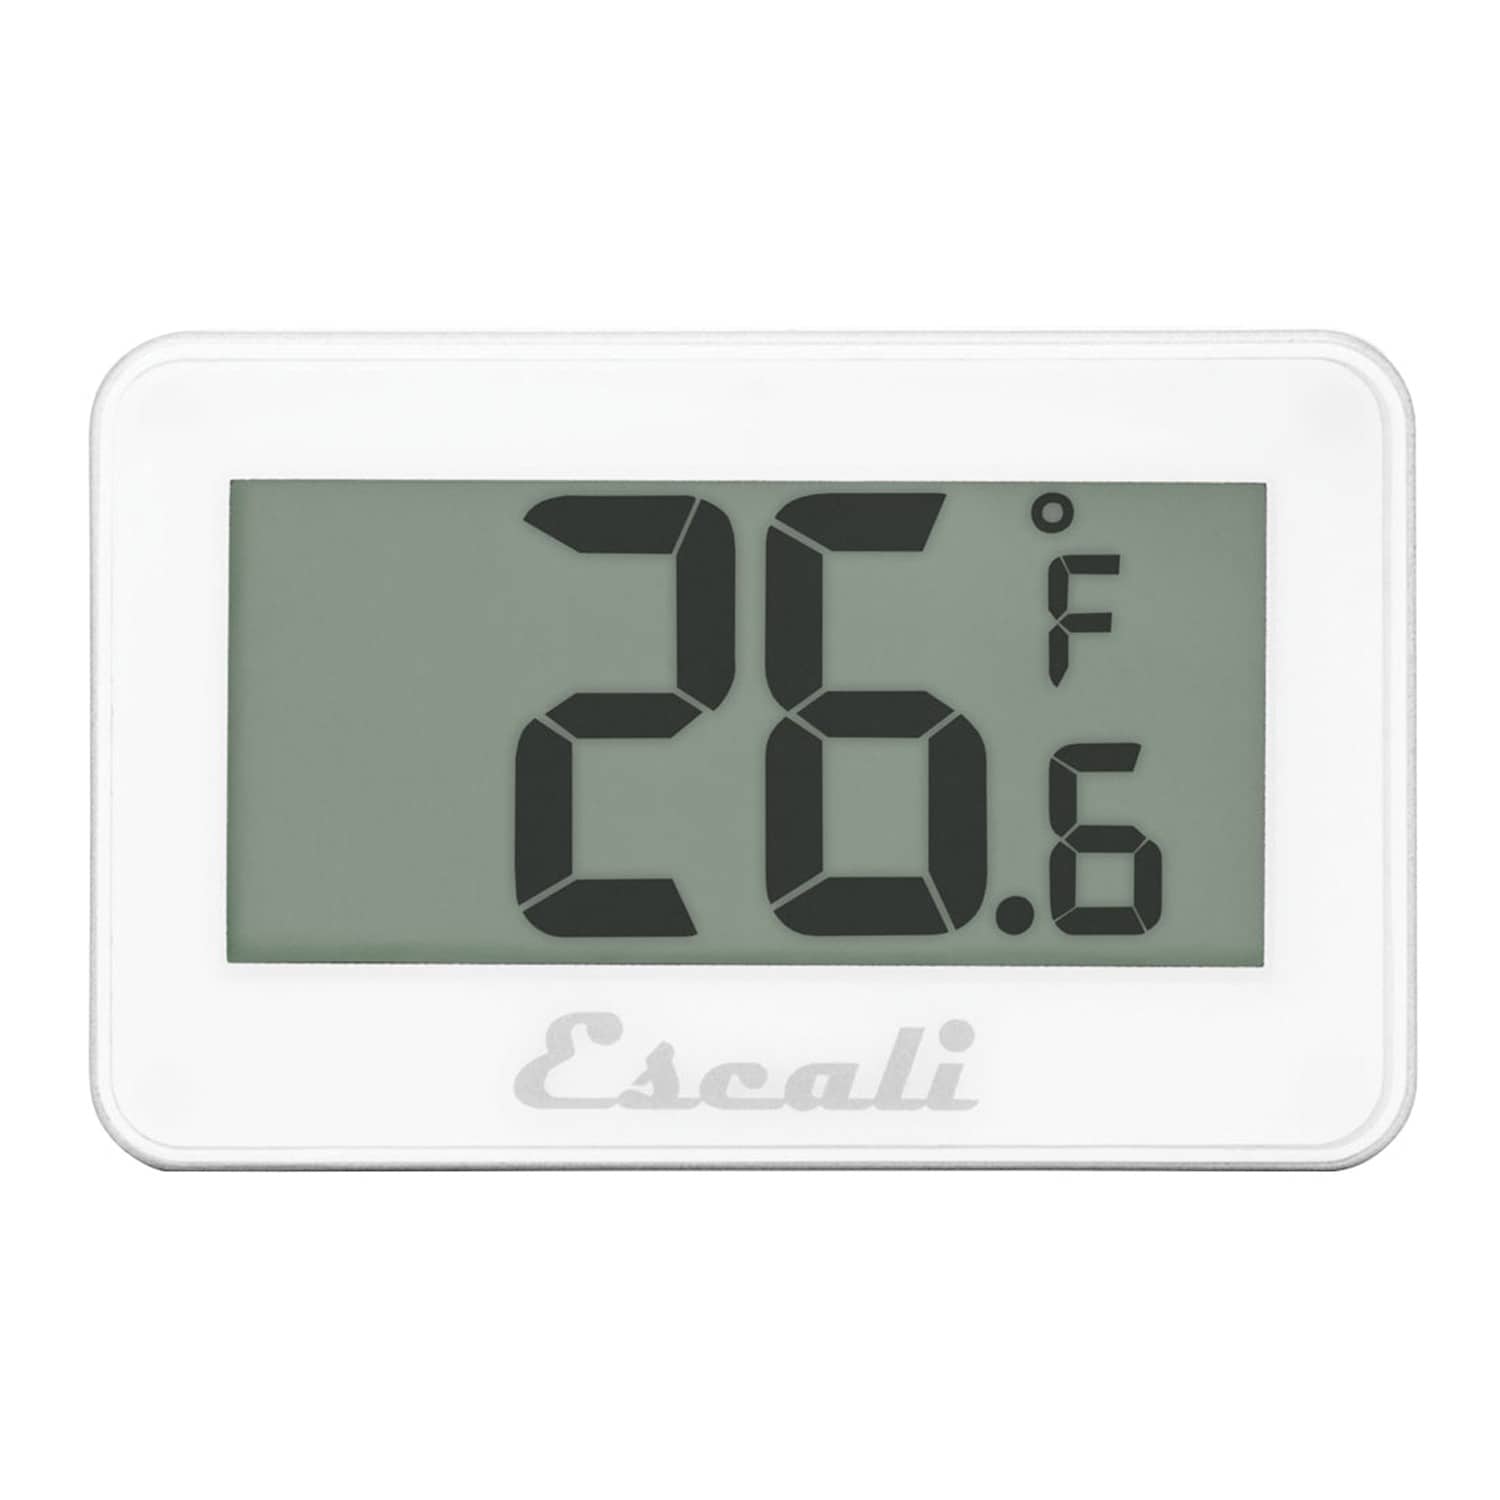 Refrigerator/Freezer Thermometer – Wrenwane